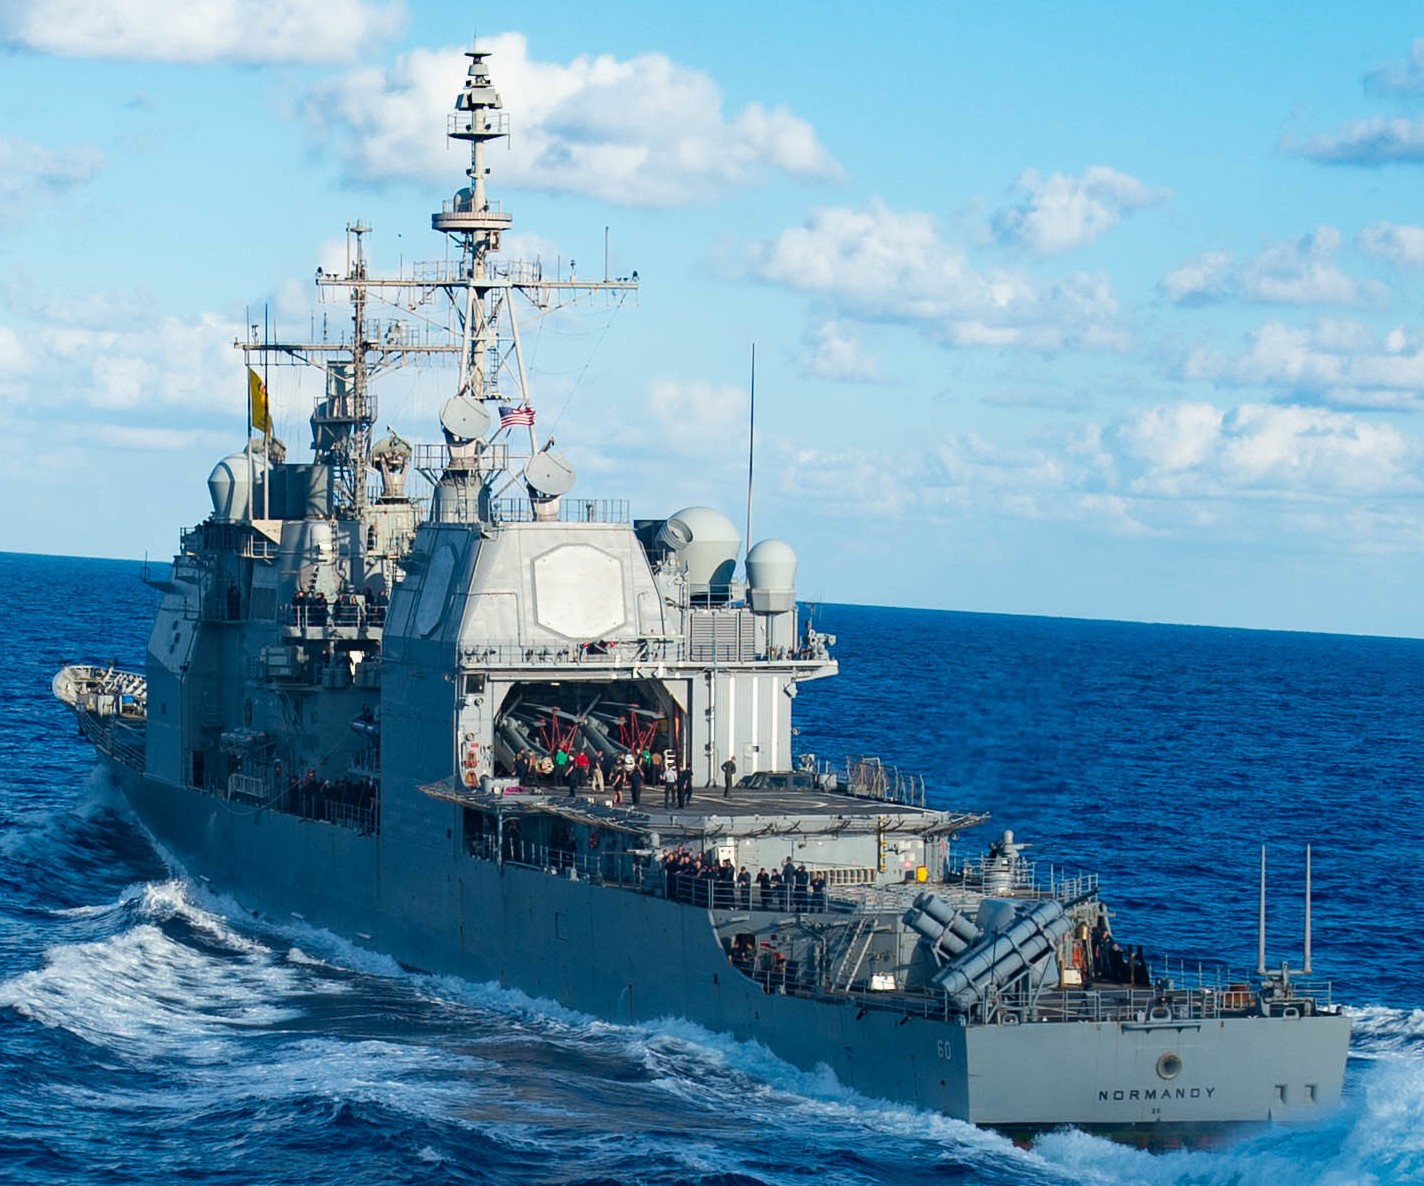 cg-60 uss normandy ticonderoga class guided missile cruiser aegis us navy mediterranean sea 85